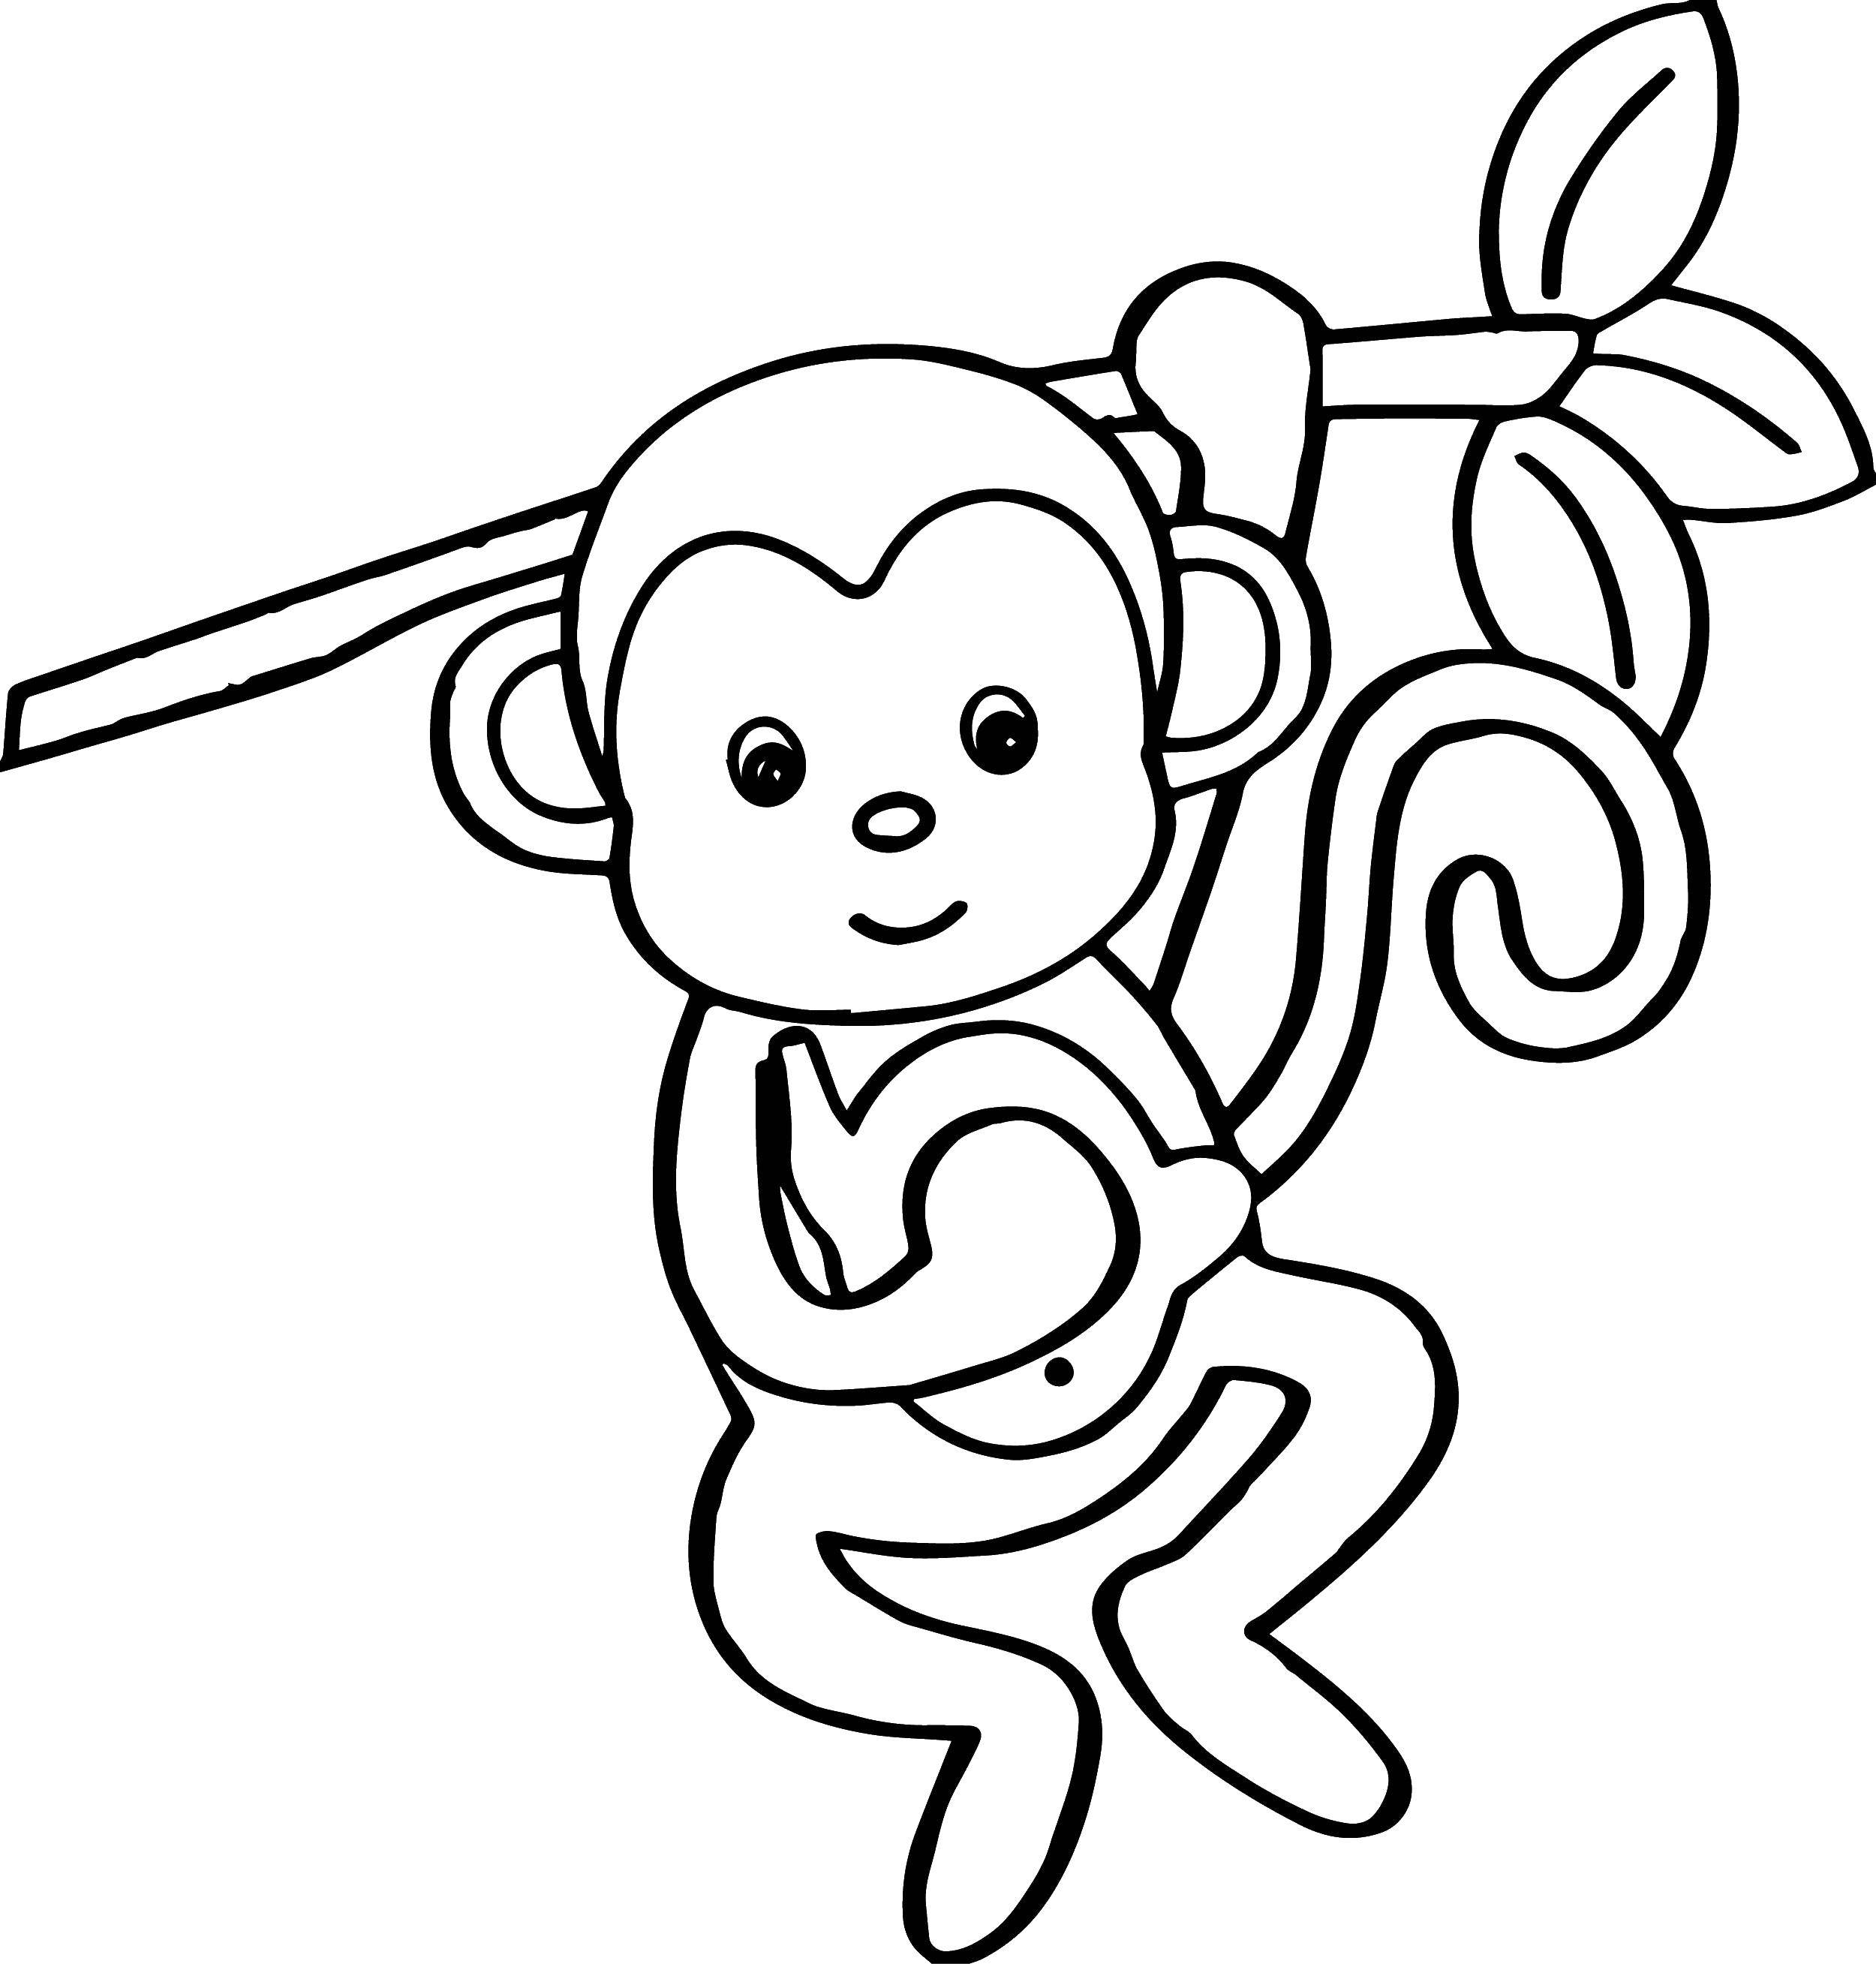 Название: Раскраска Обезьяна на ветке. Категория: обезьяна. Теги: обезьяна.